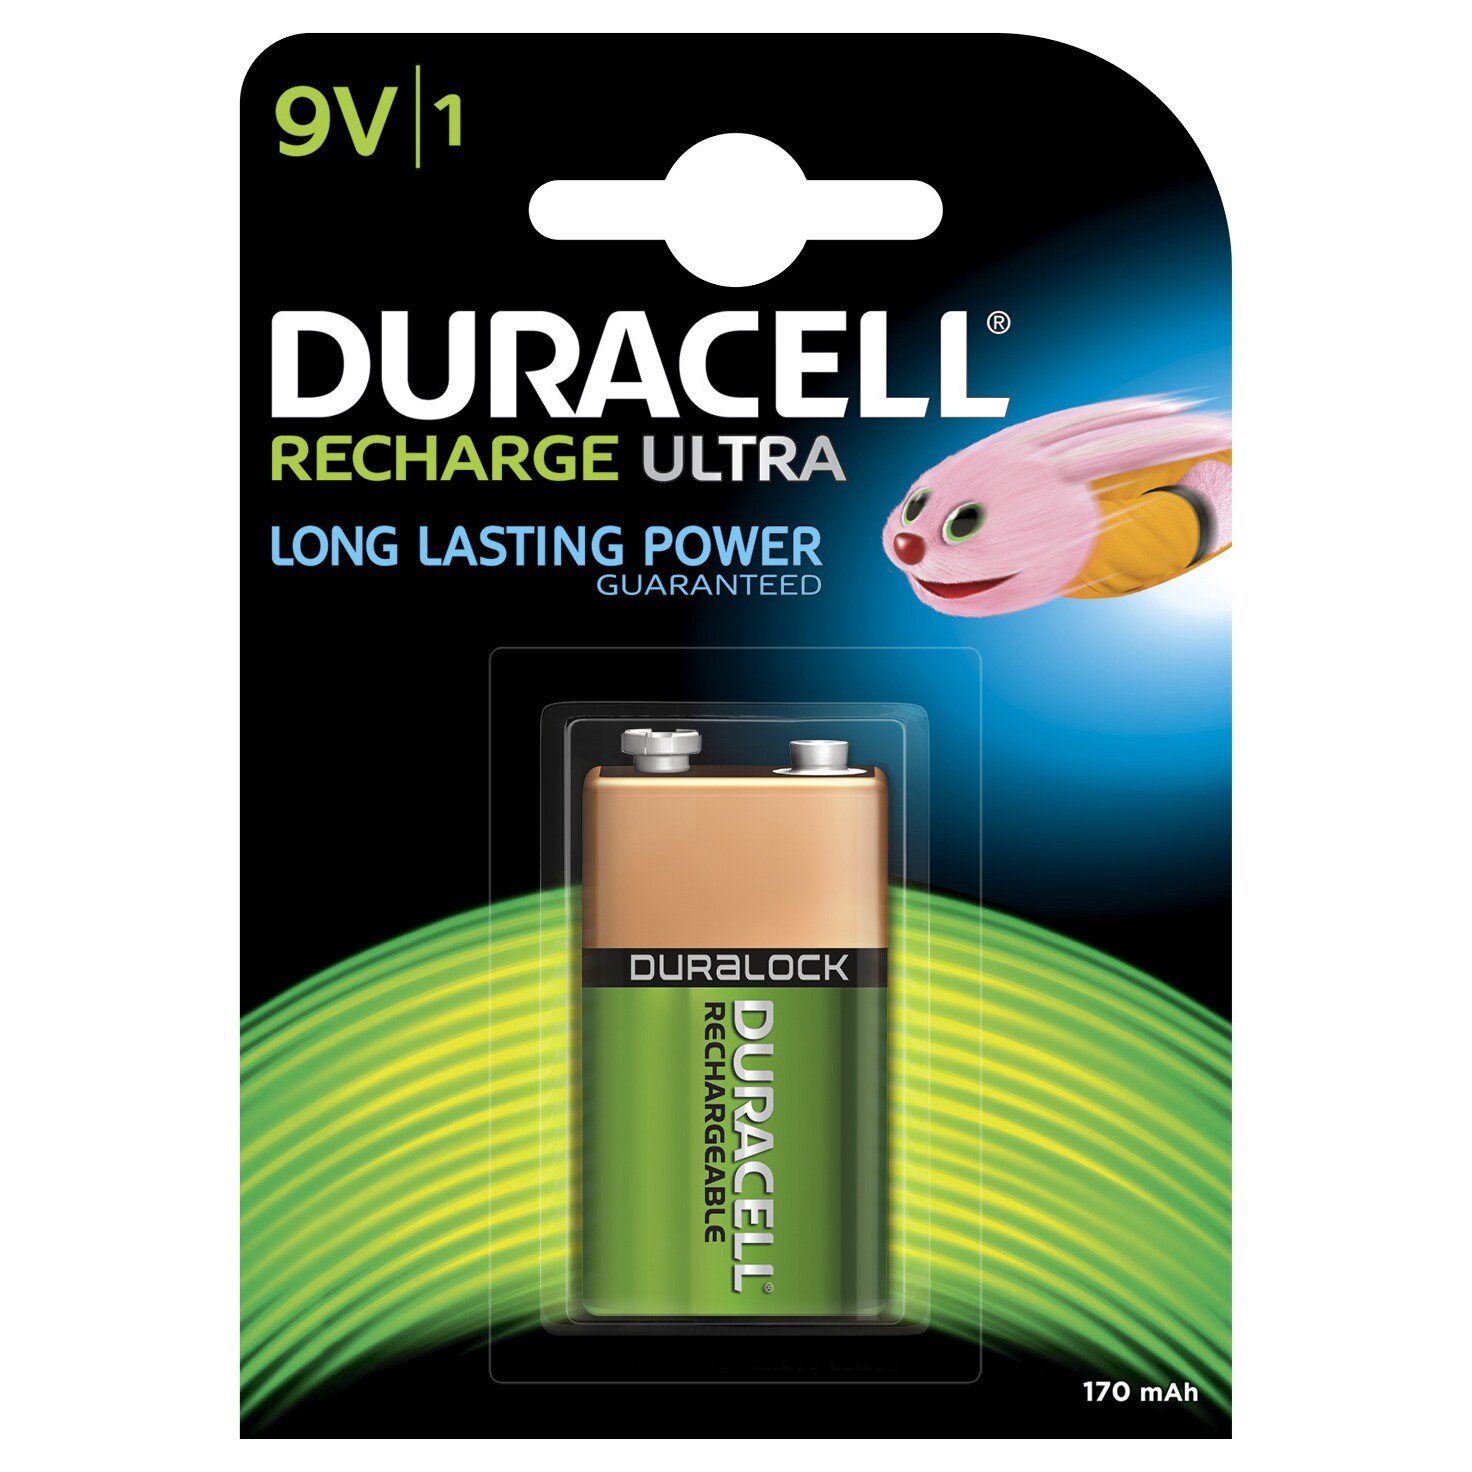 Duracell Recharge Plus 9V 170mAh batteri - 1 stk - Batterier - Elgiganten